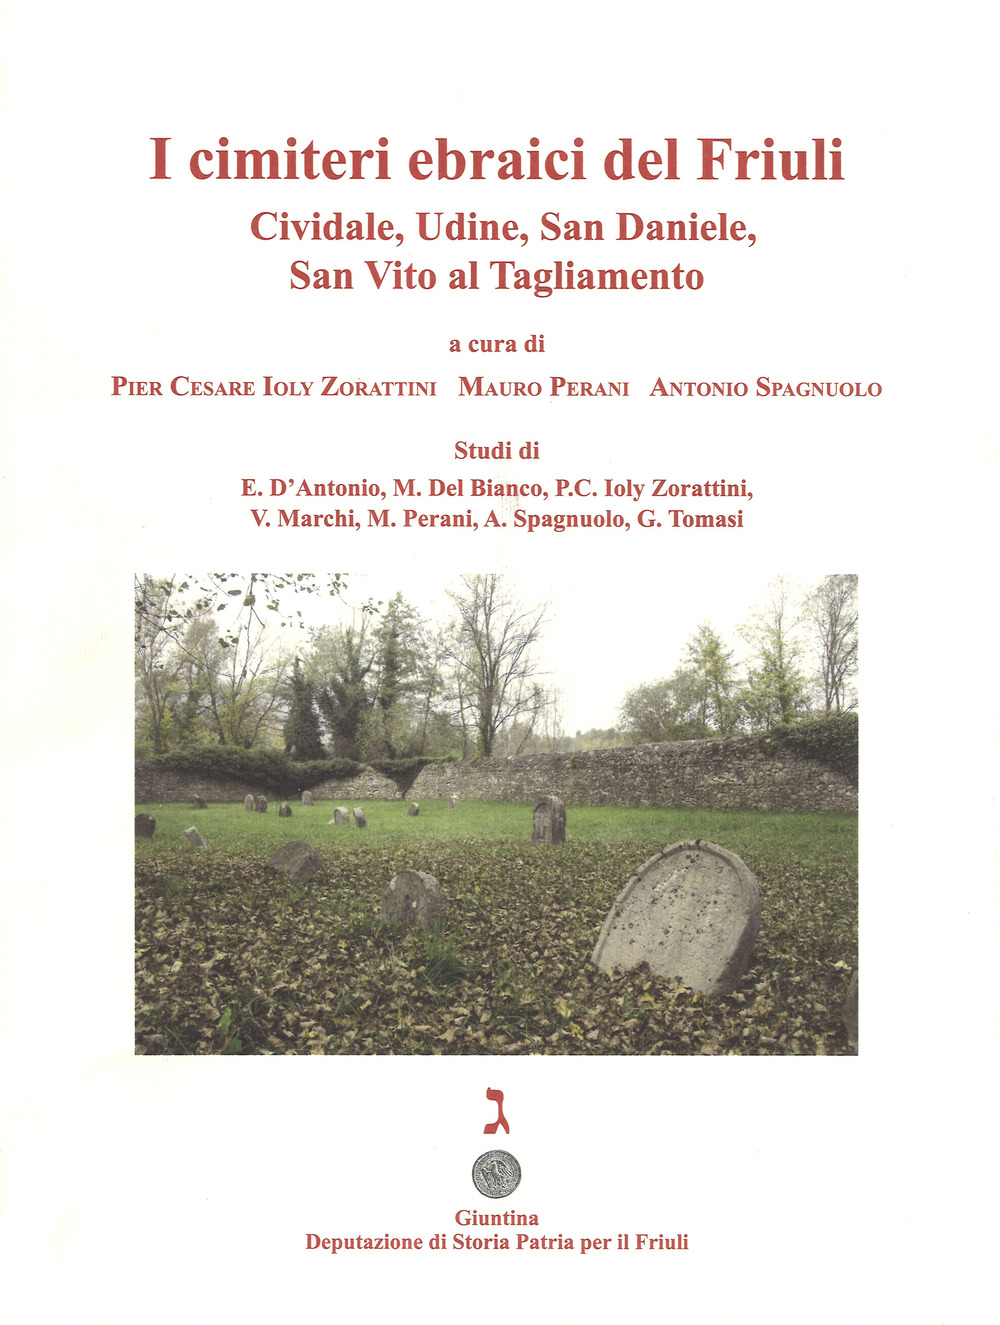 I cimiteri ebraici del Friuli. Cividale, Udine, San Daniele, San Vito al Tagliamento. Ediz. illustrata